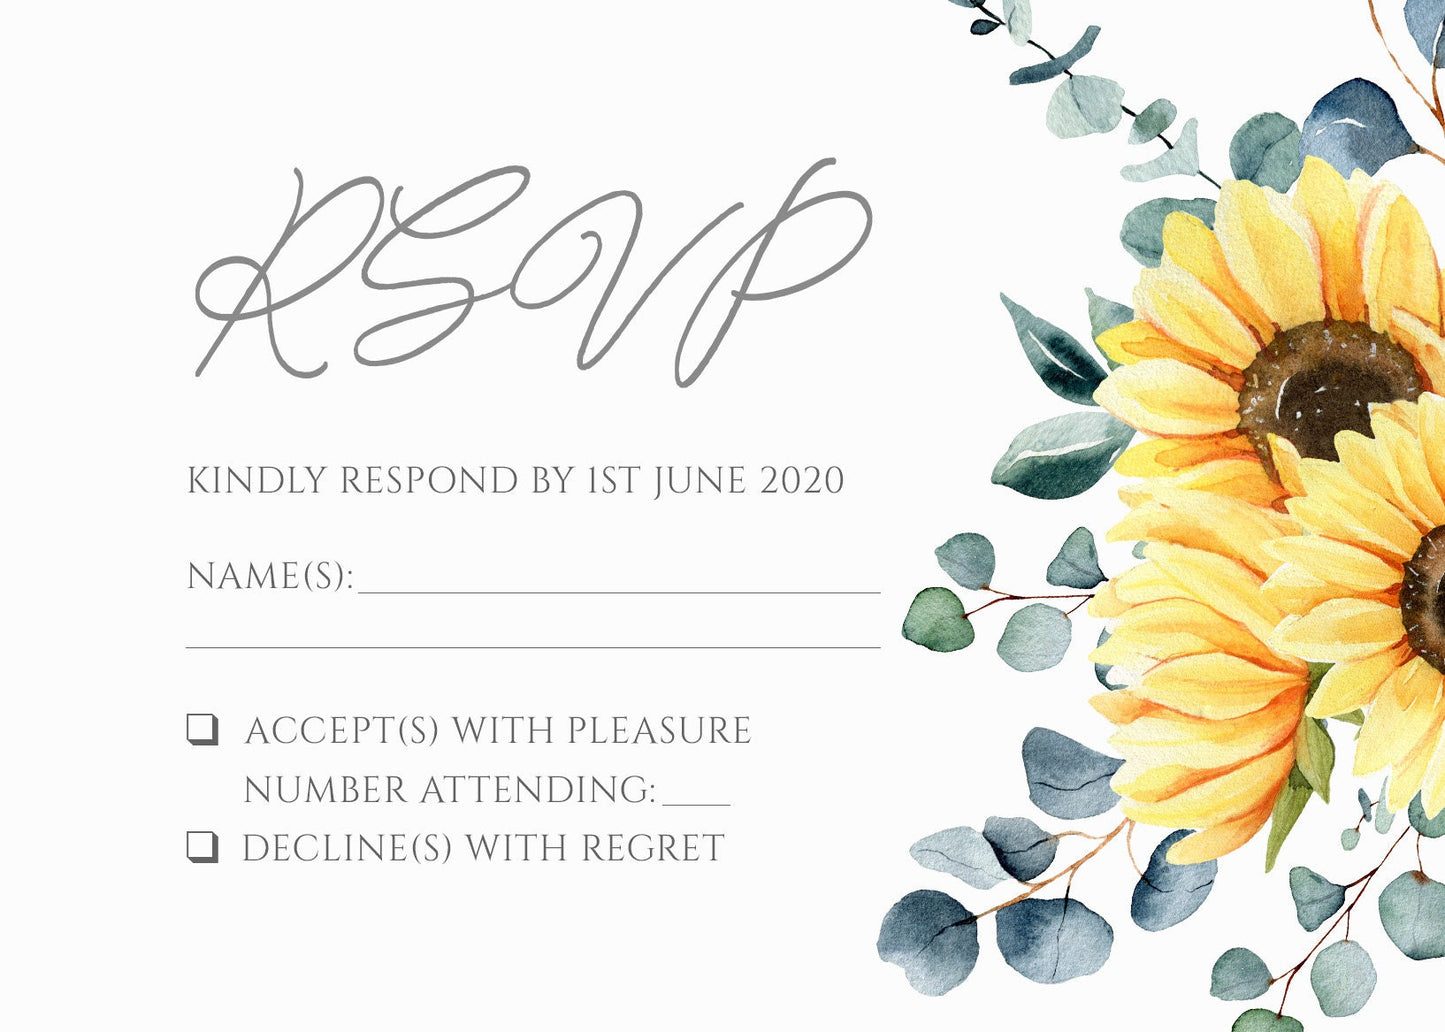 Sunflower and Eucalyptus Wedding Invitation Suite, Rustic Sunflower Wedding invitations, Greenery Wedding, Sunflower invitation and rsvp